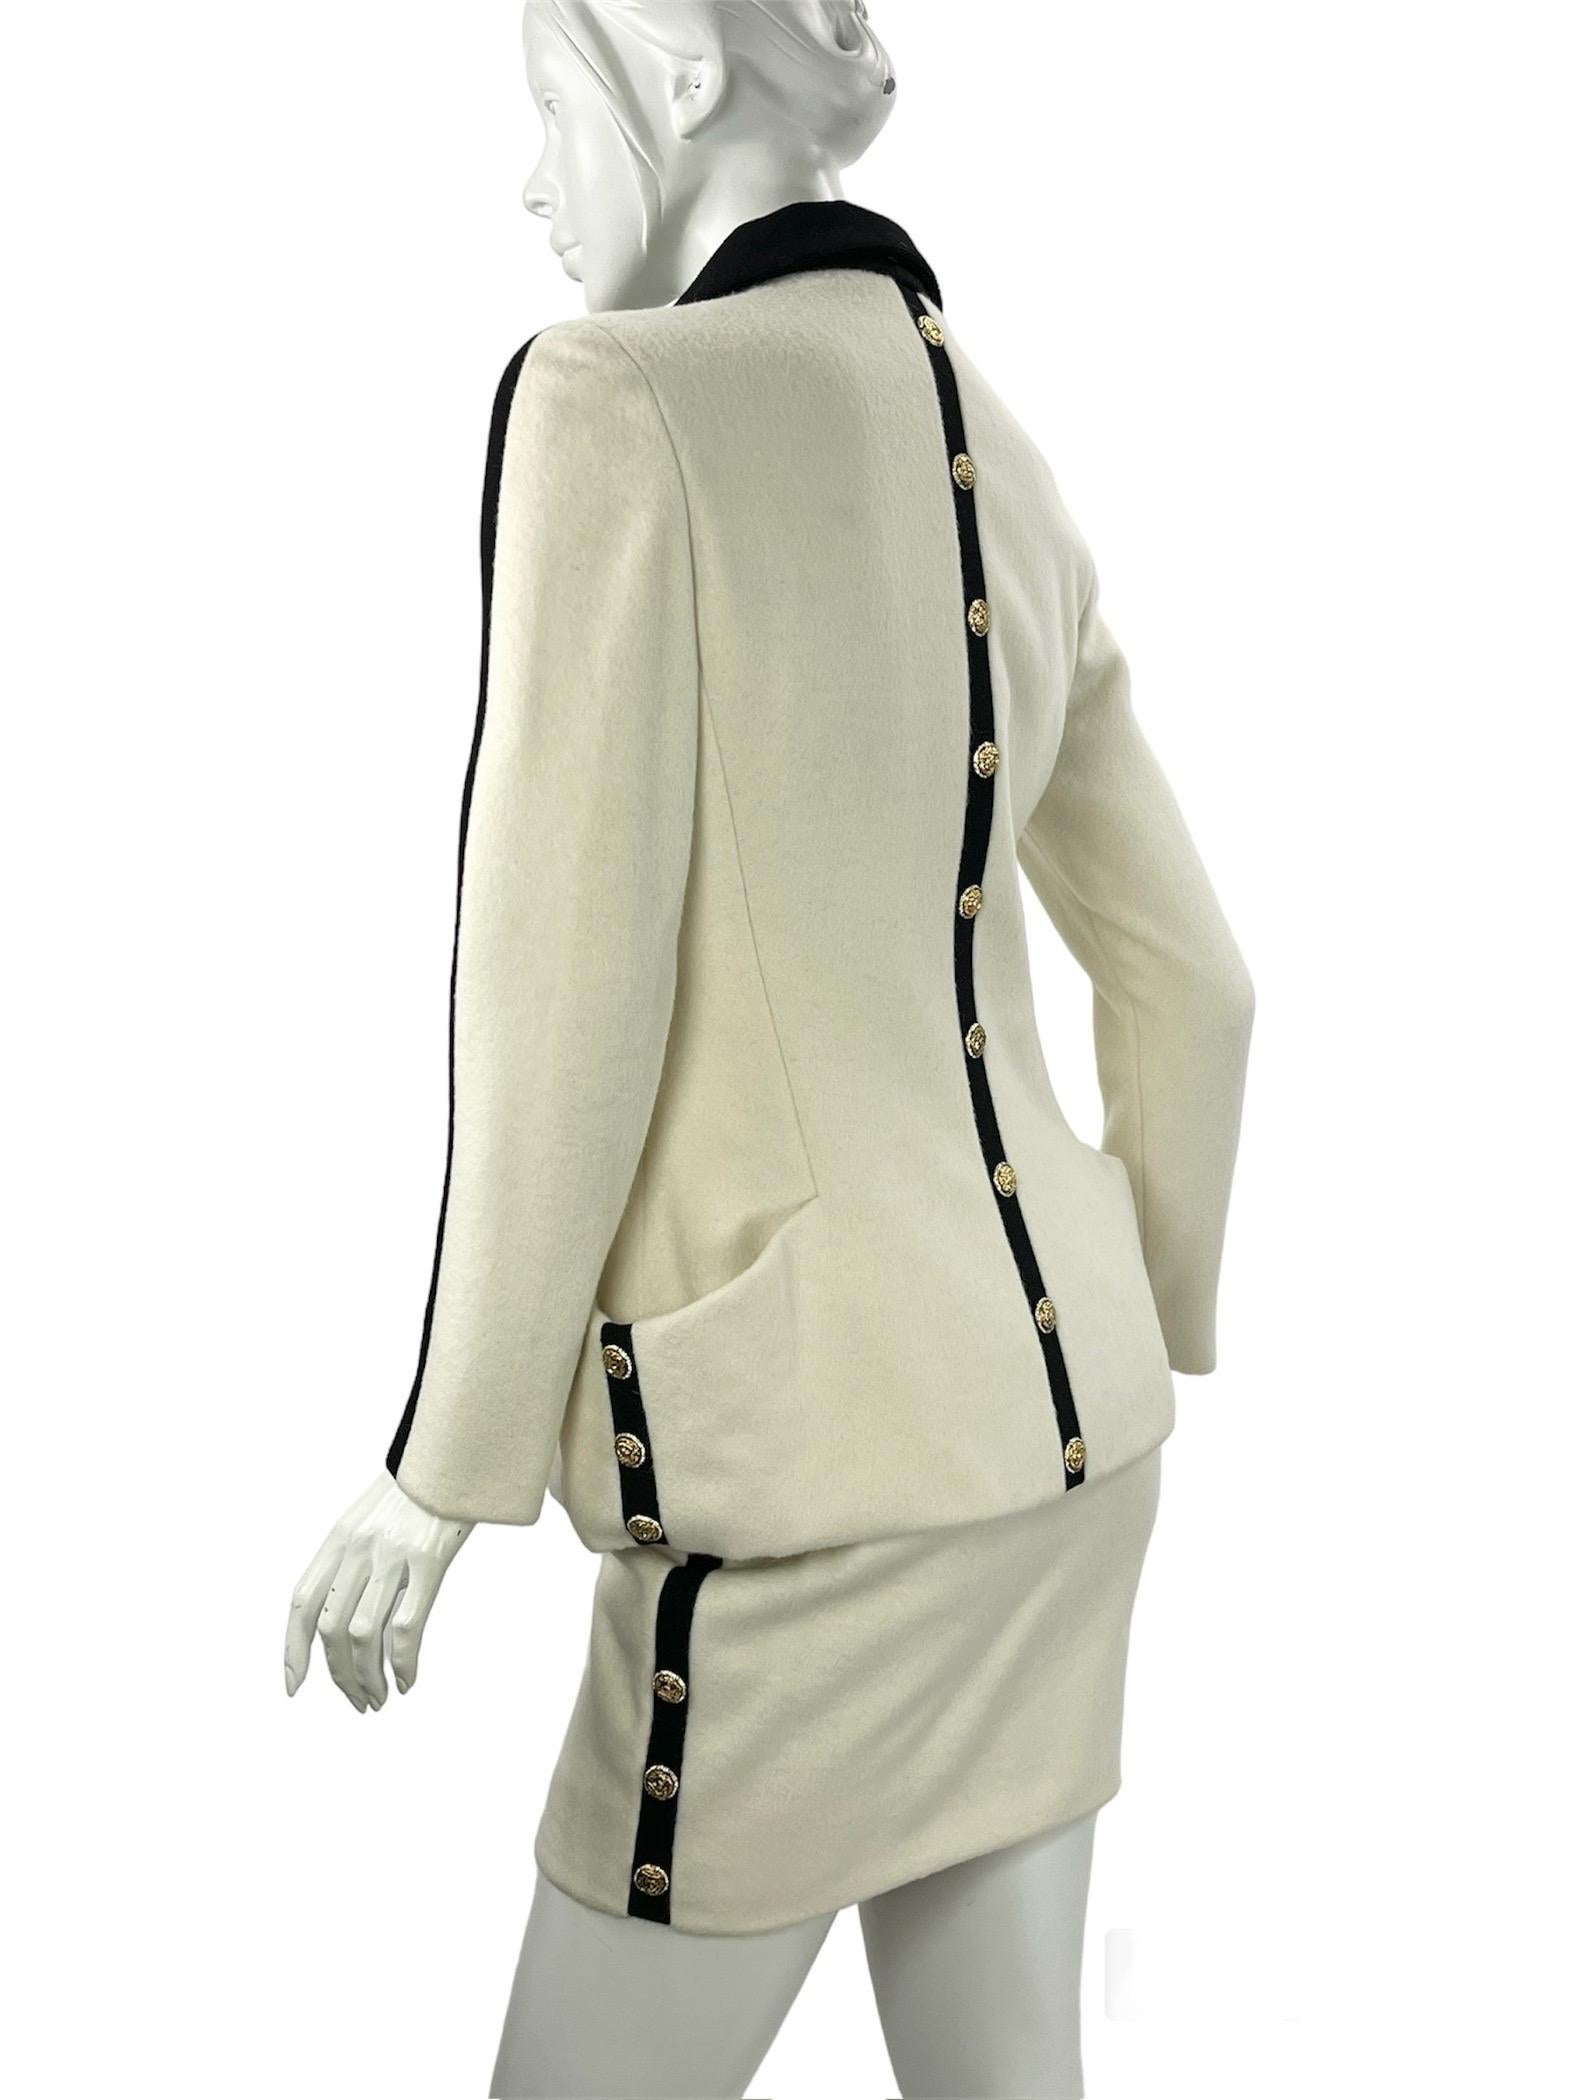 Women's 1991 Vintage Runway Atelier Versace blazer & skirt suit worn by Claudia Schiffer For Sale